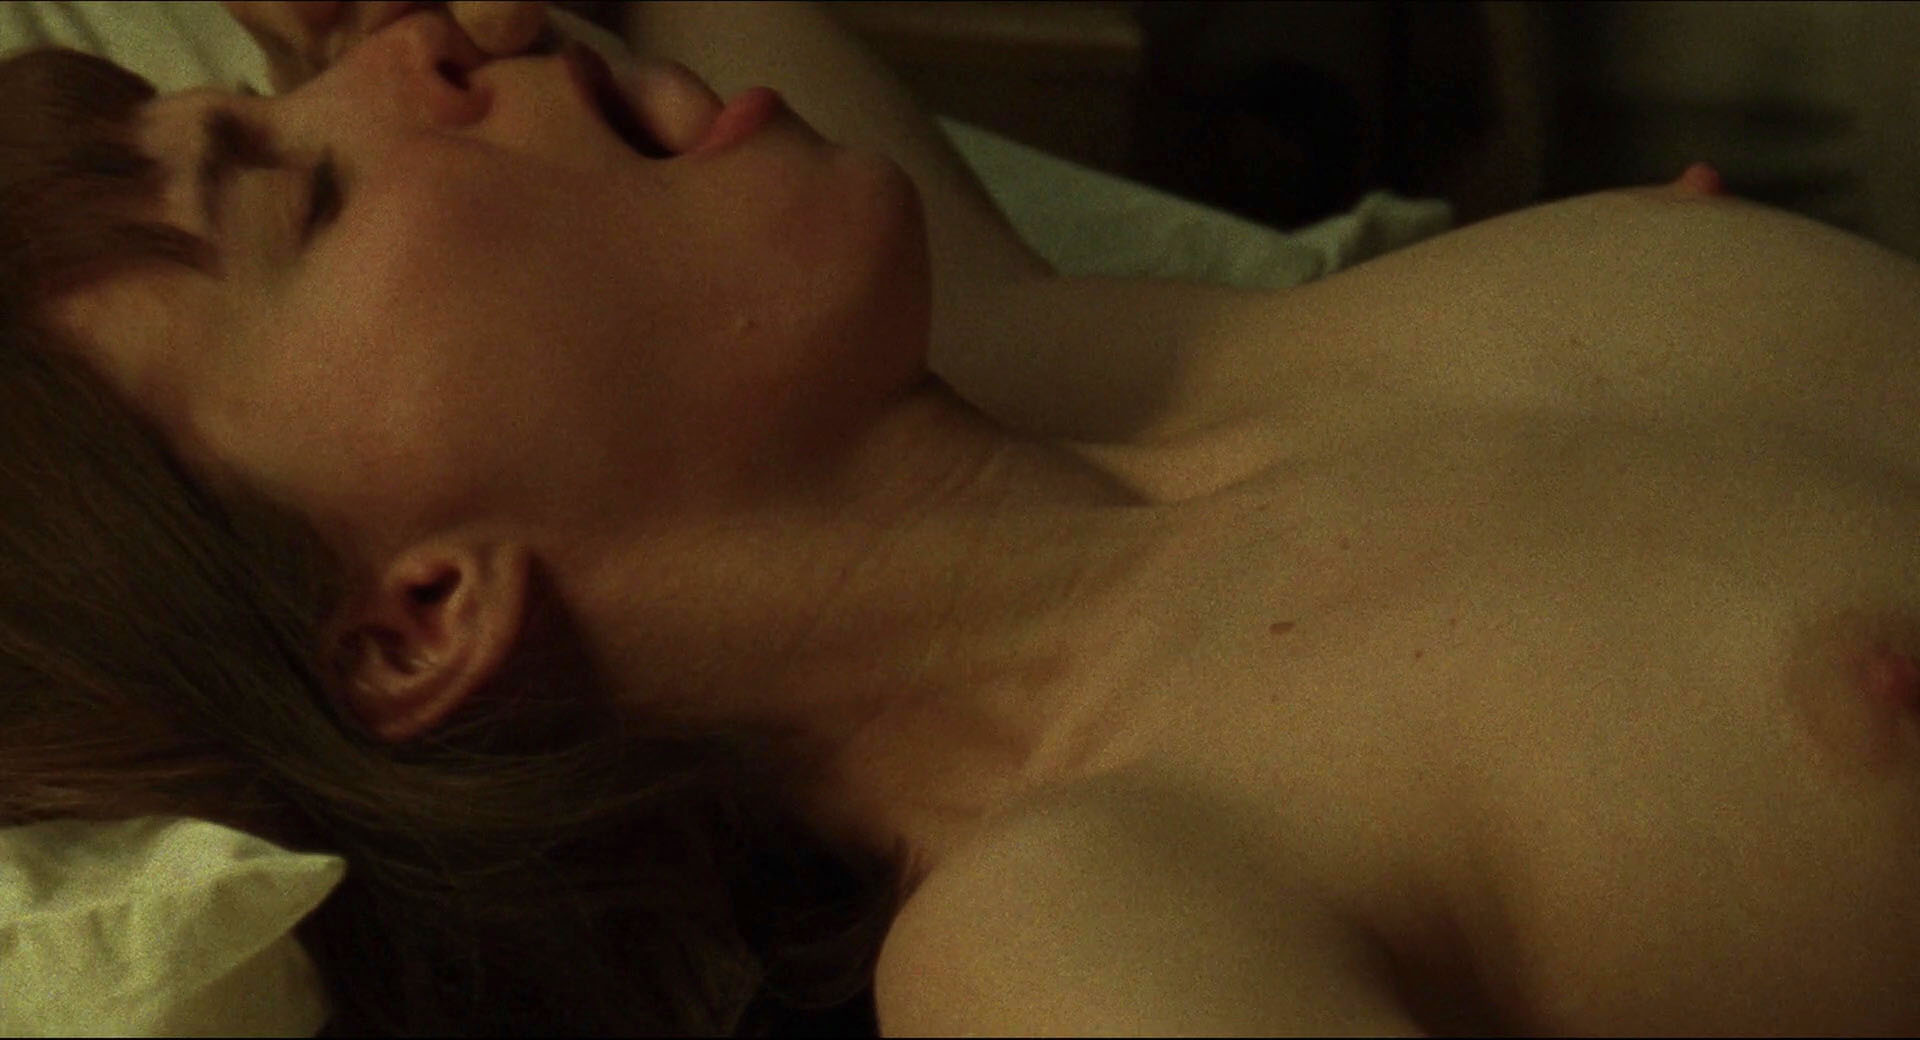 Naked Rooney Mara In Carol